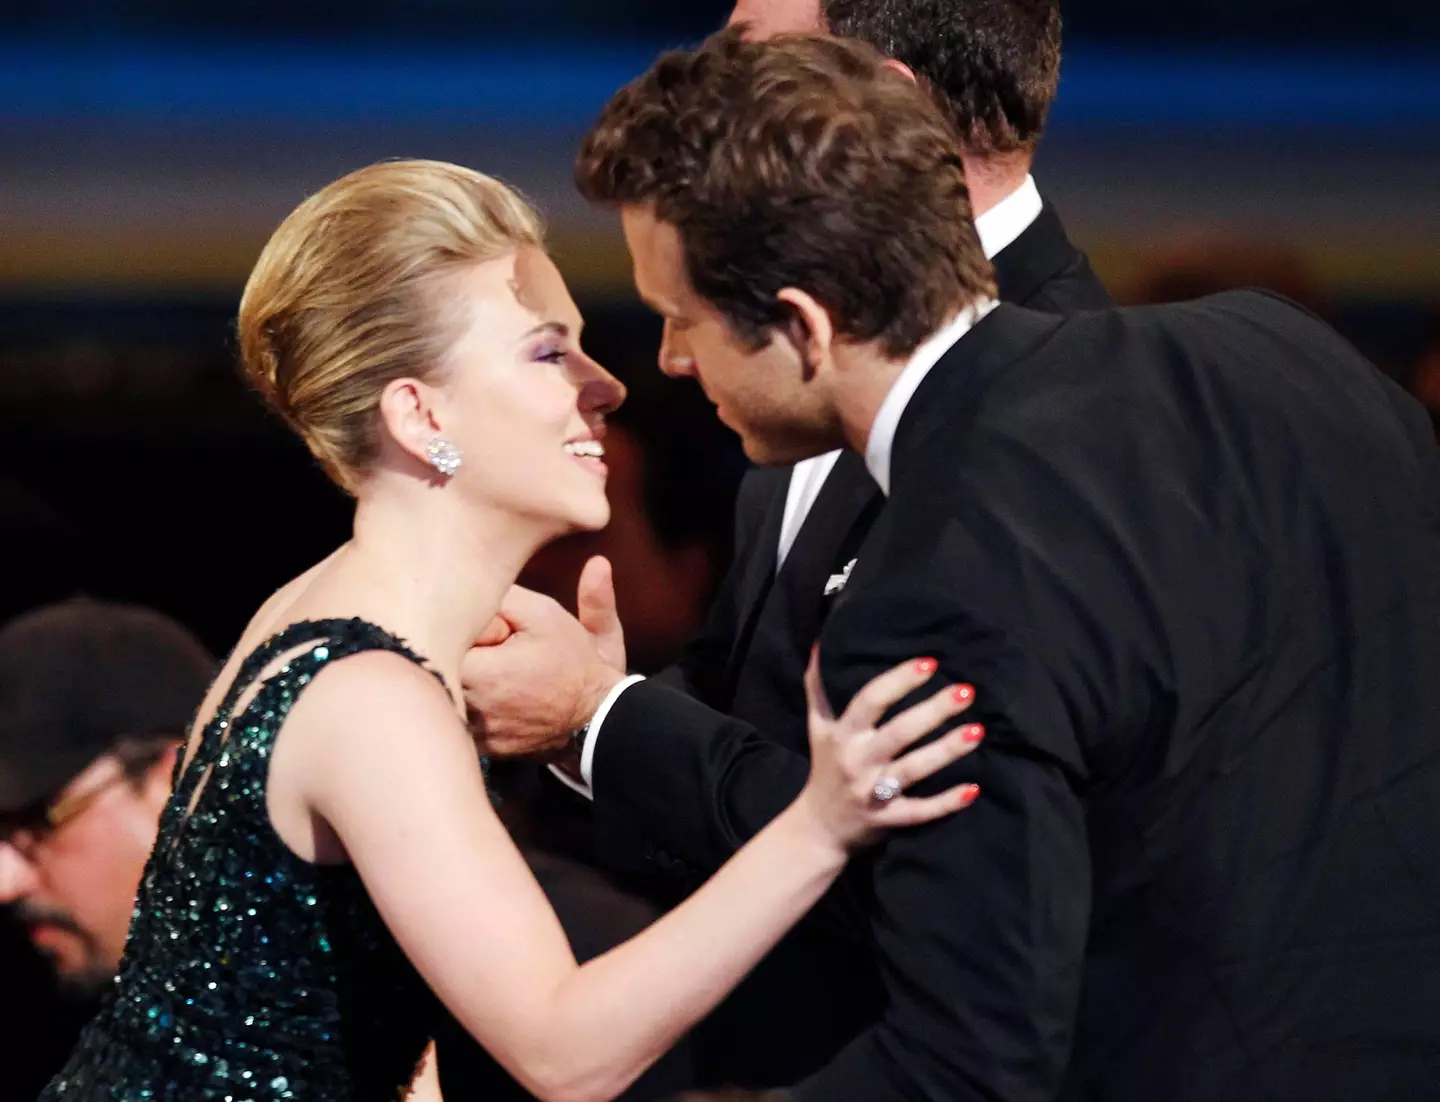 Ryan Reynolds and Scarlett Johansson were once married.